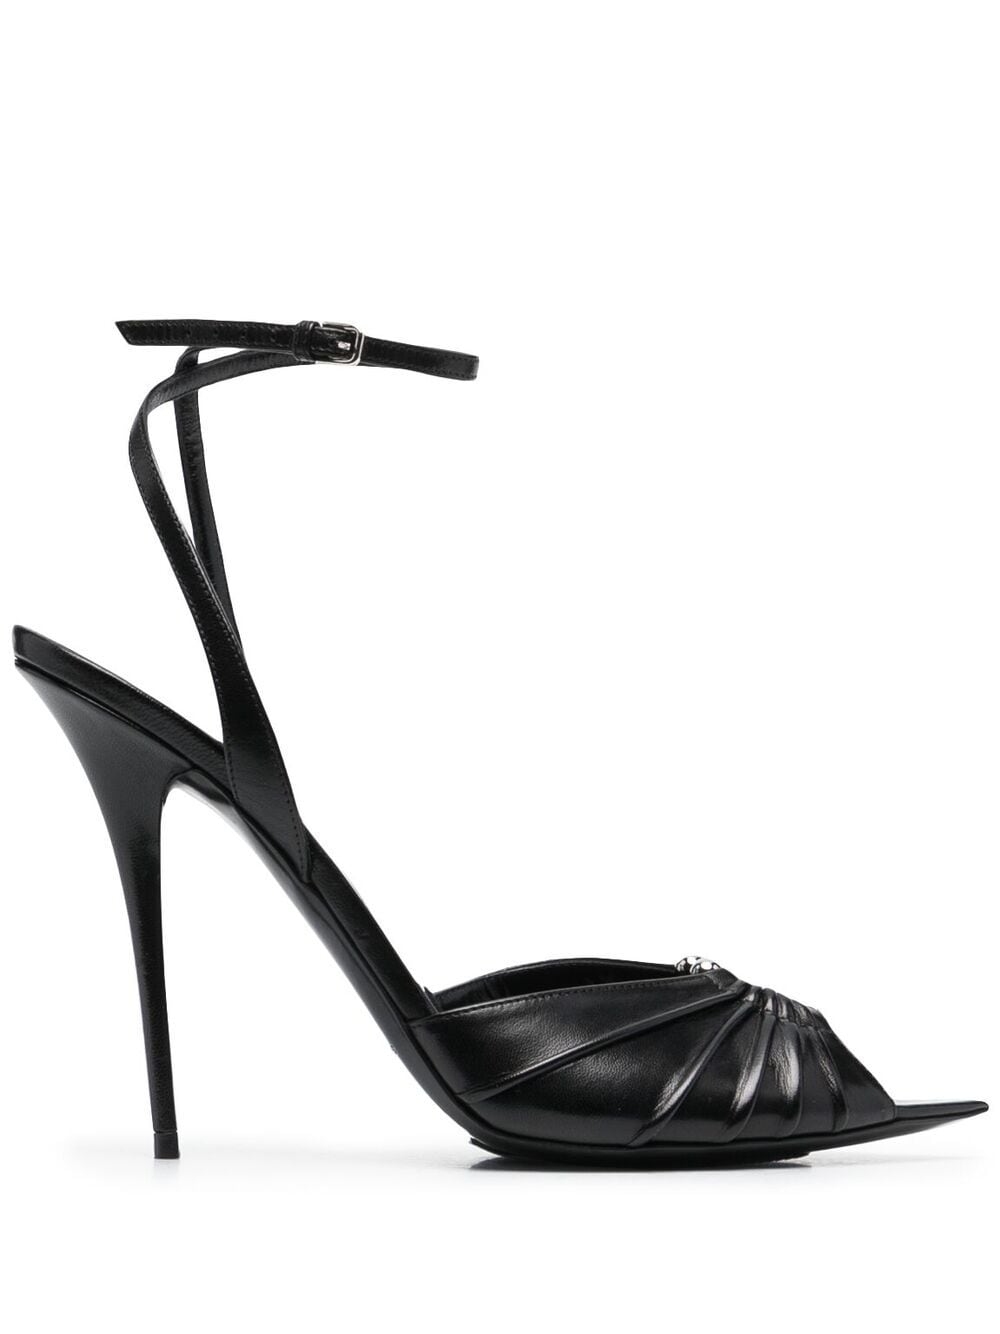 Saint Laurent Xsl 110mm Sandals In Black